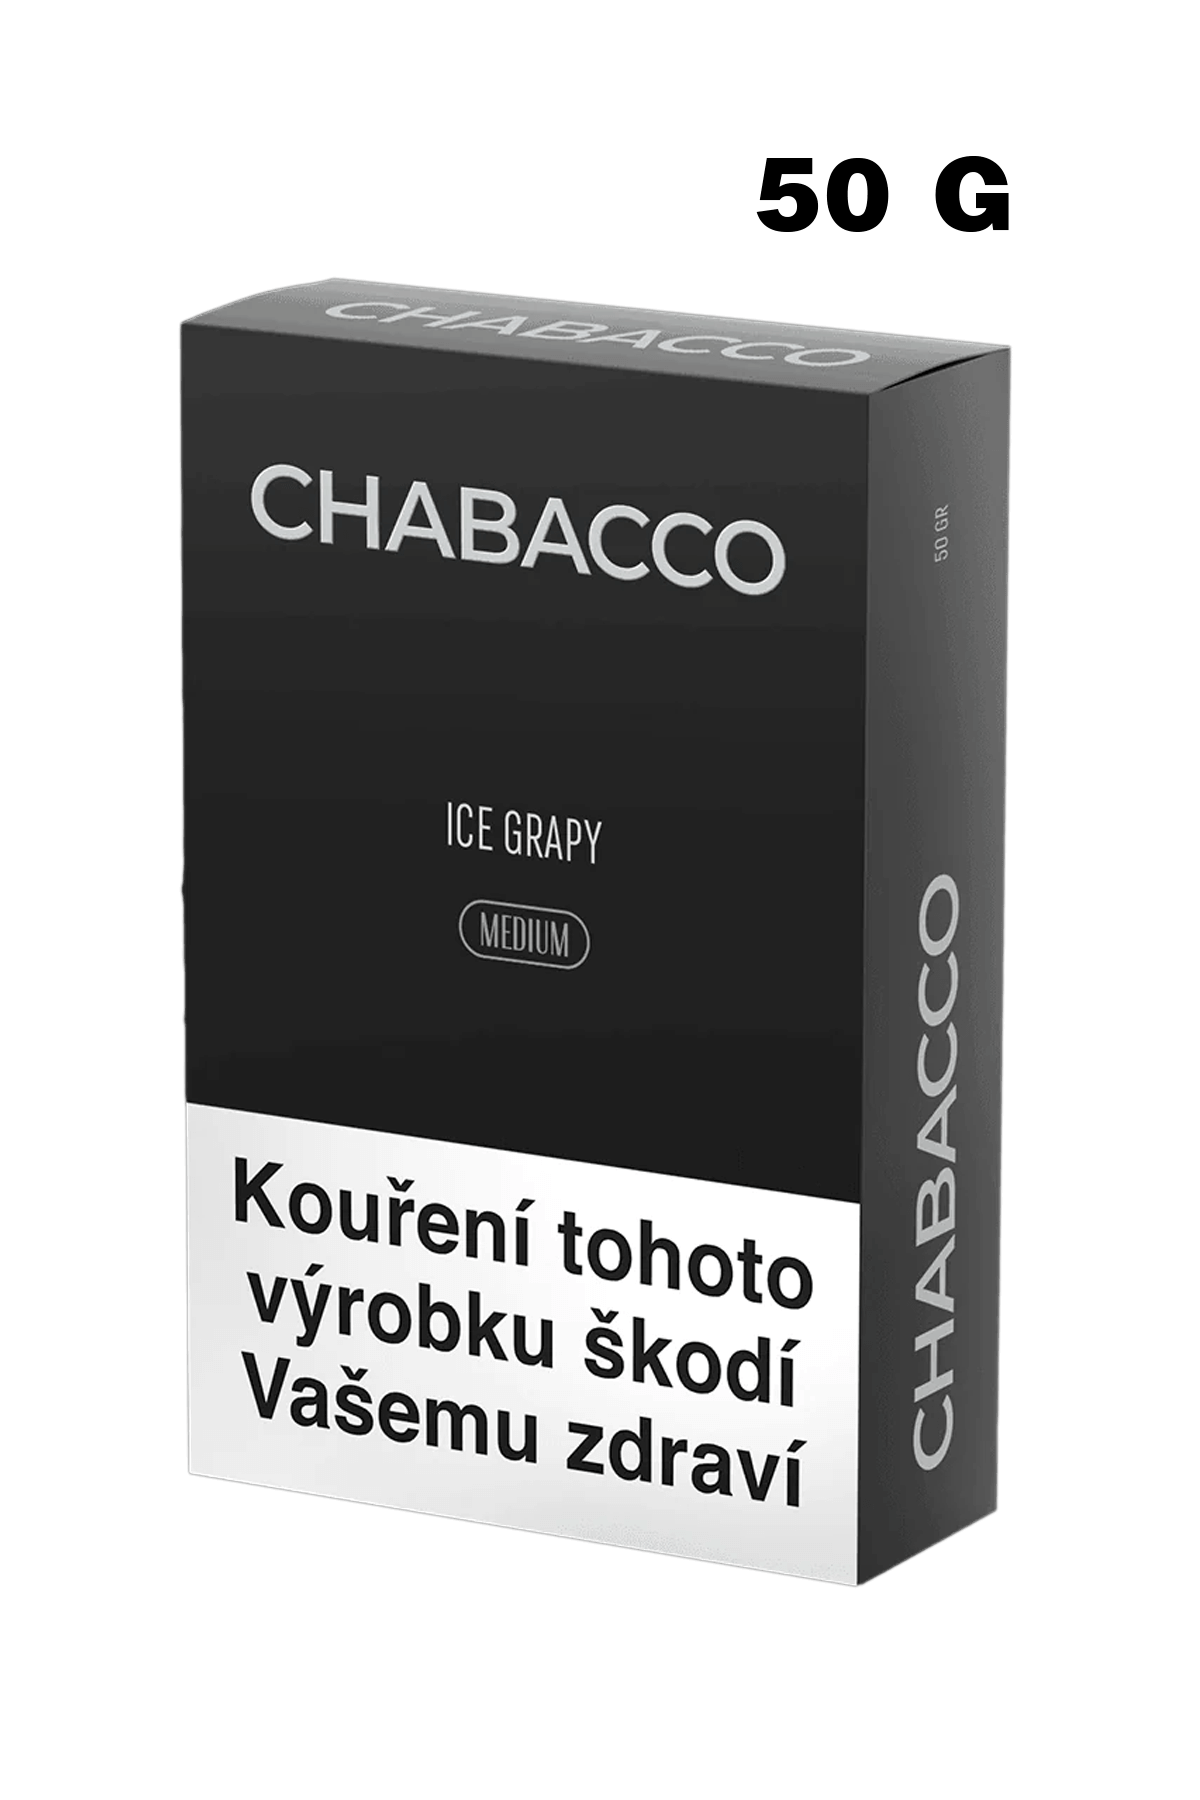 Tobacco - Chabacco Medium 50g - Ice Grapy